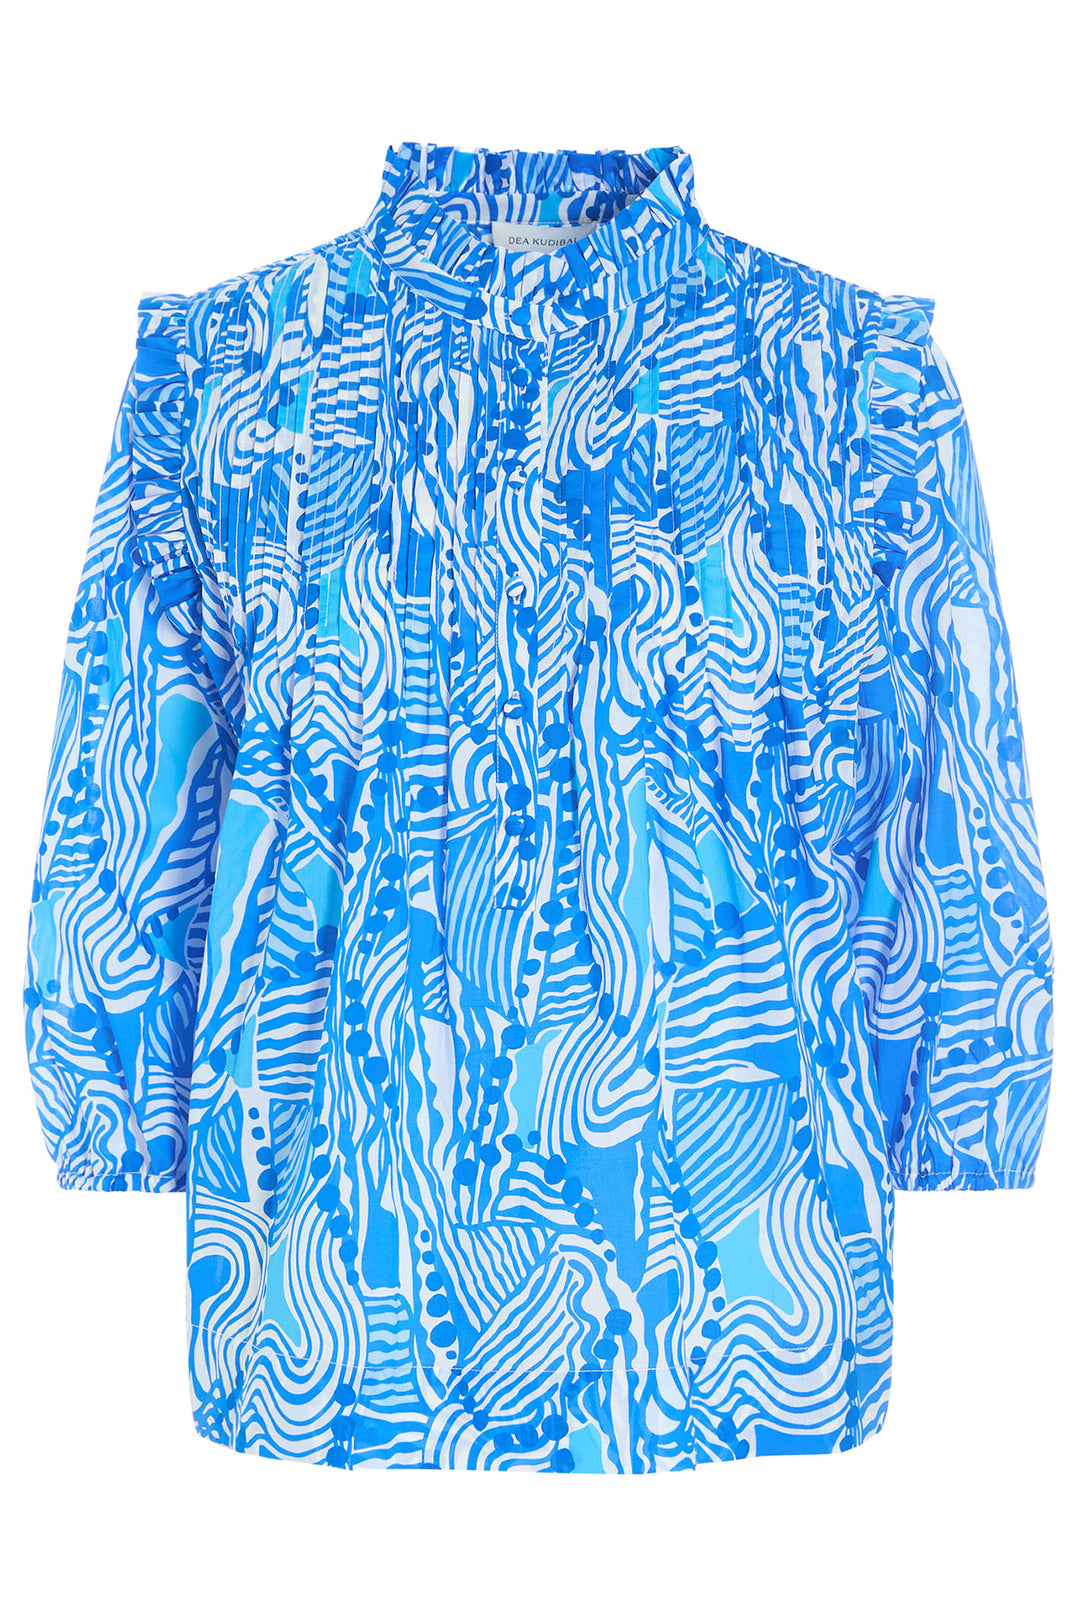 Dea Kudibal Linedea 0520424 5771 Blue Calavera Sea Print Ruffle Blouse - Olivia Grace Fashion